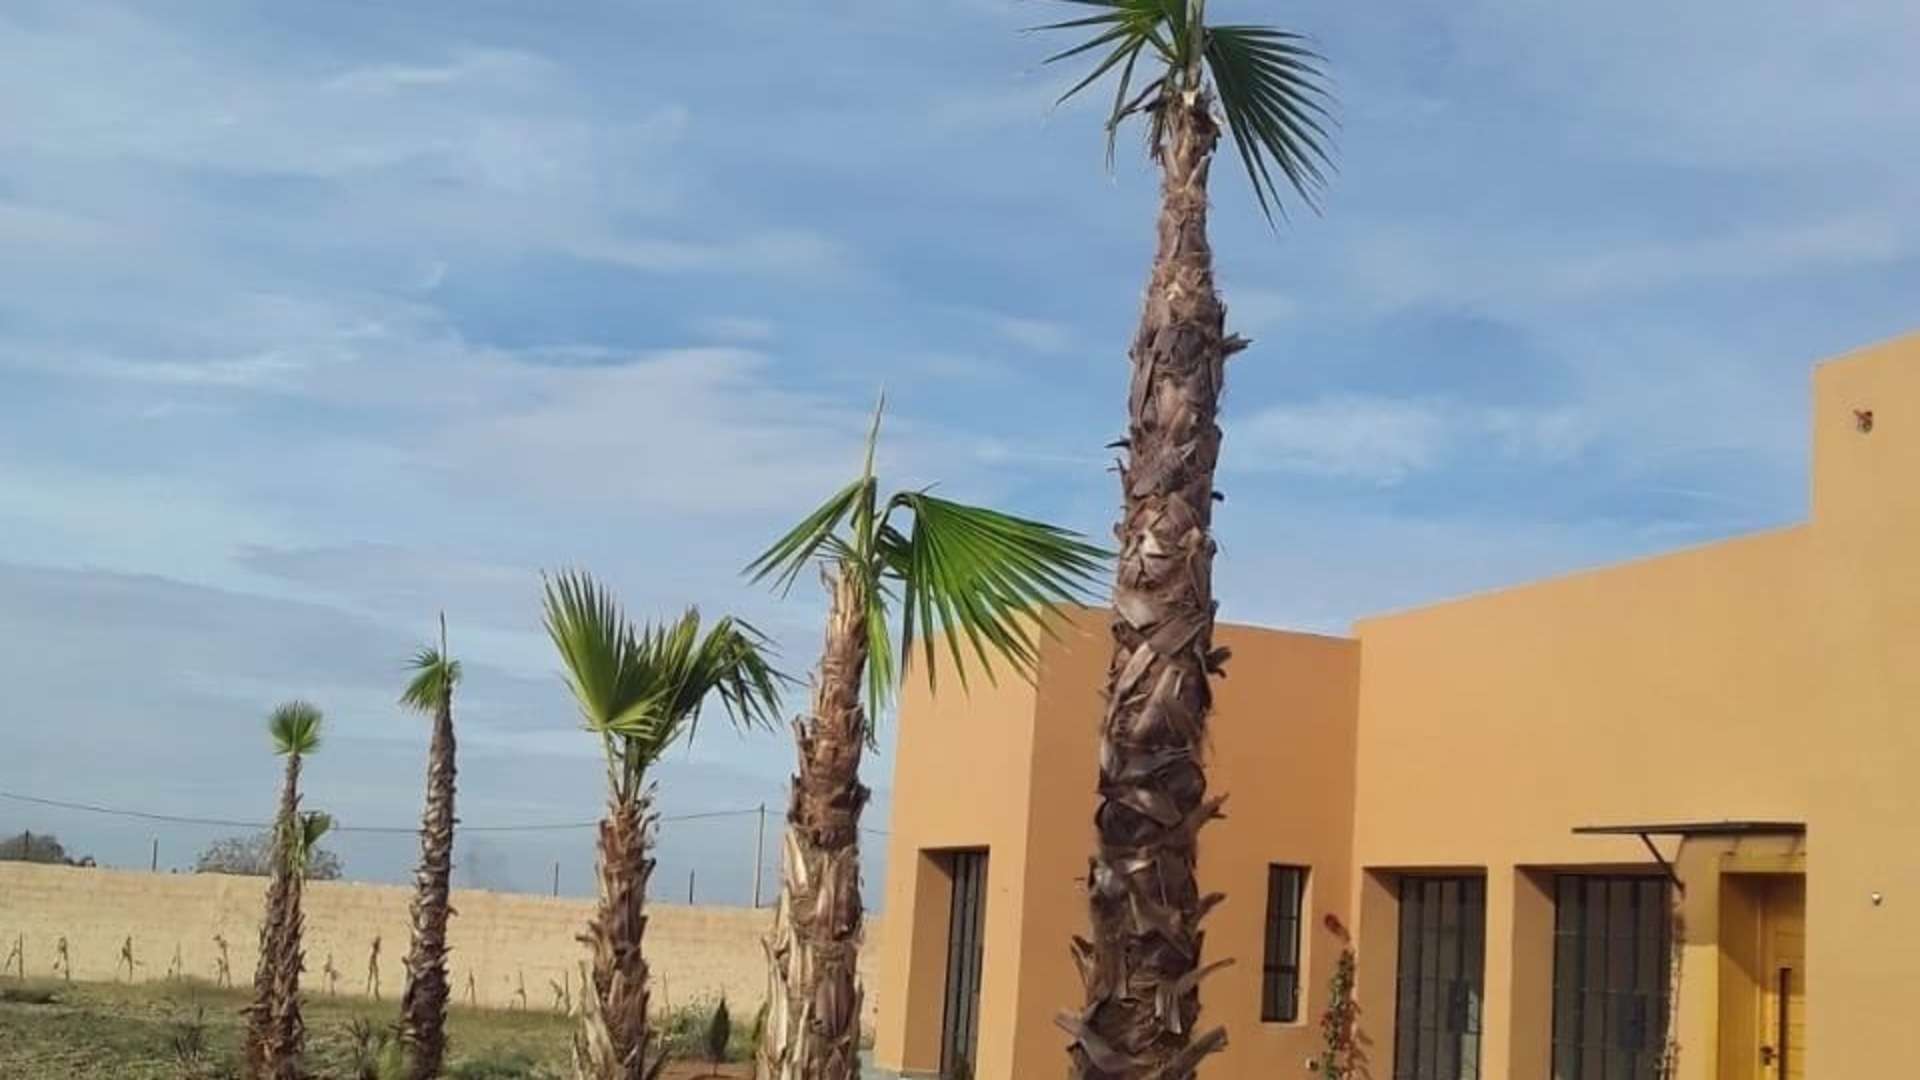 Vente,Villa,Villa neuve de 4ch sur terrain 3855m2 Rte Amizmiz,Marrakech,Route Amizmiz